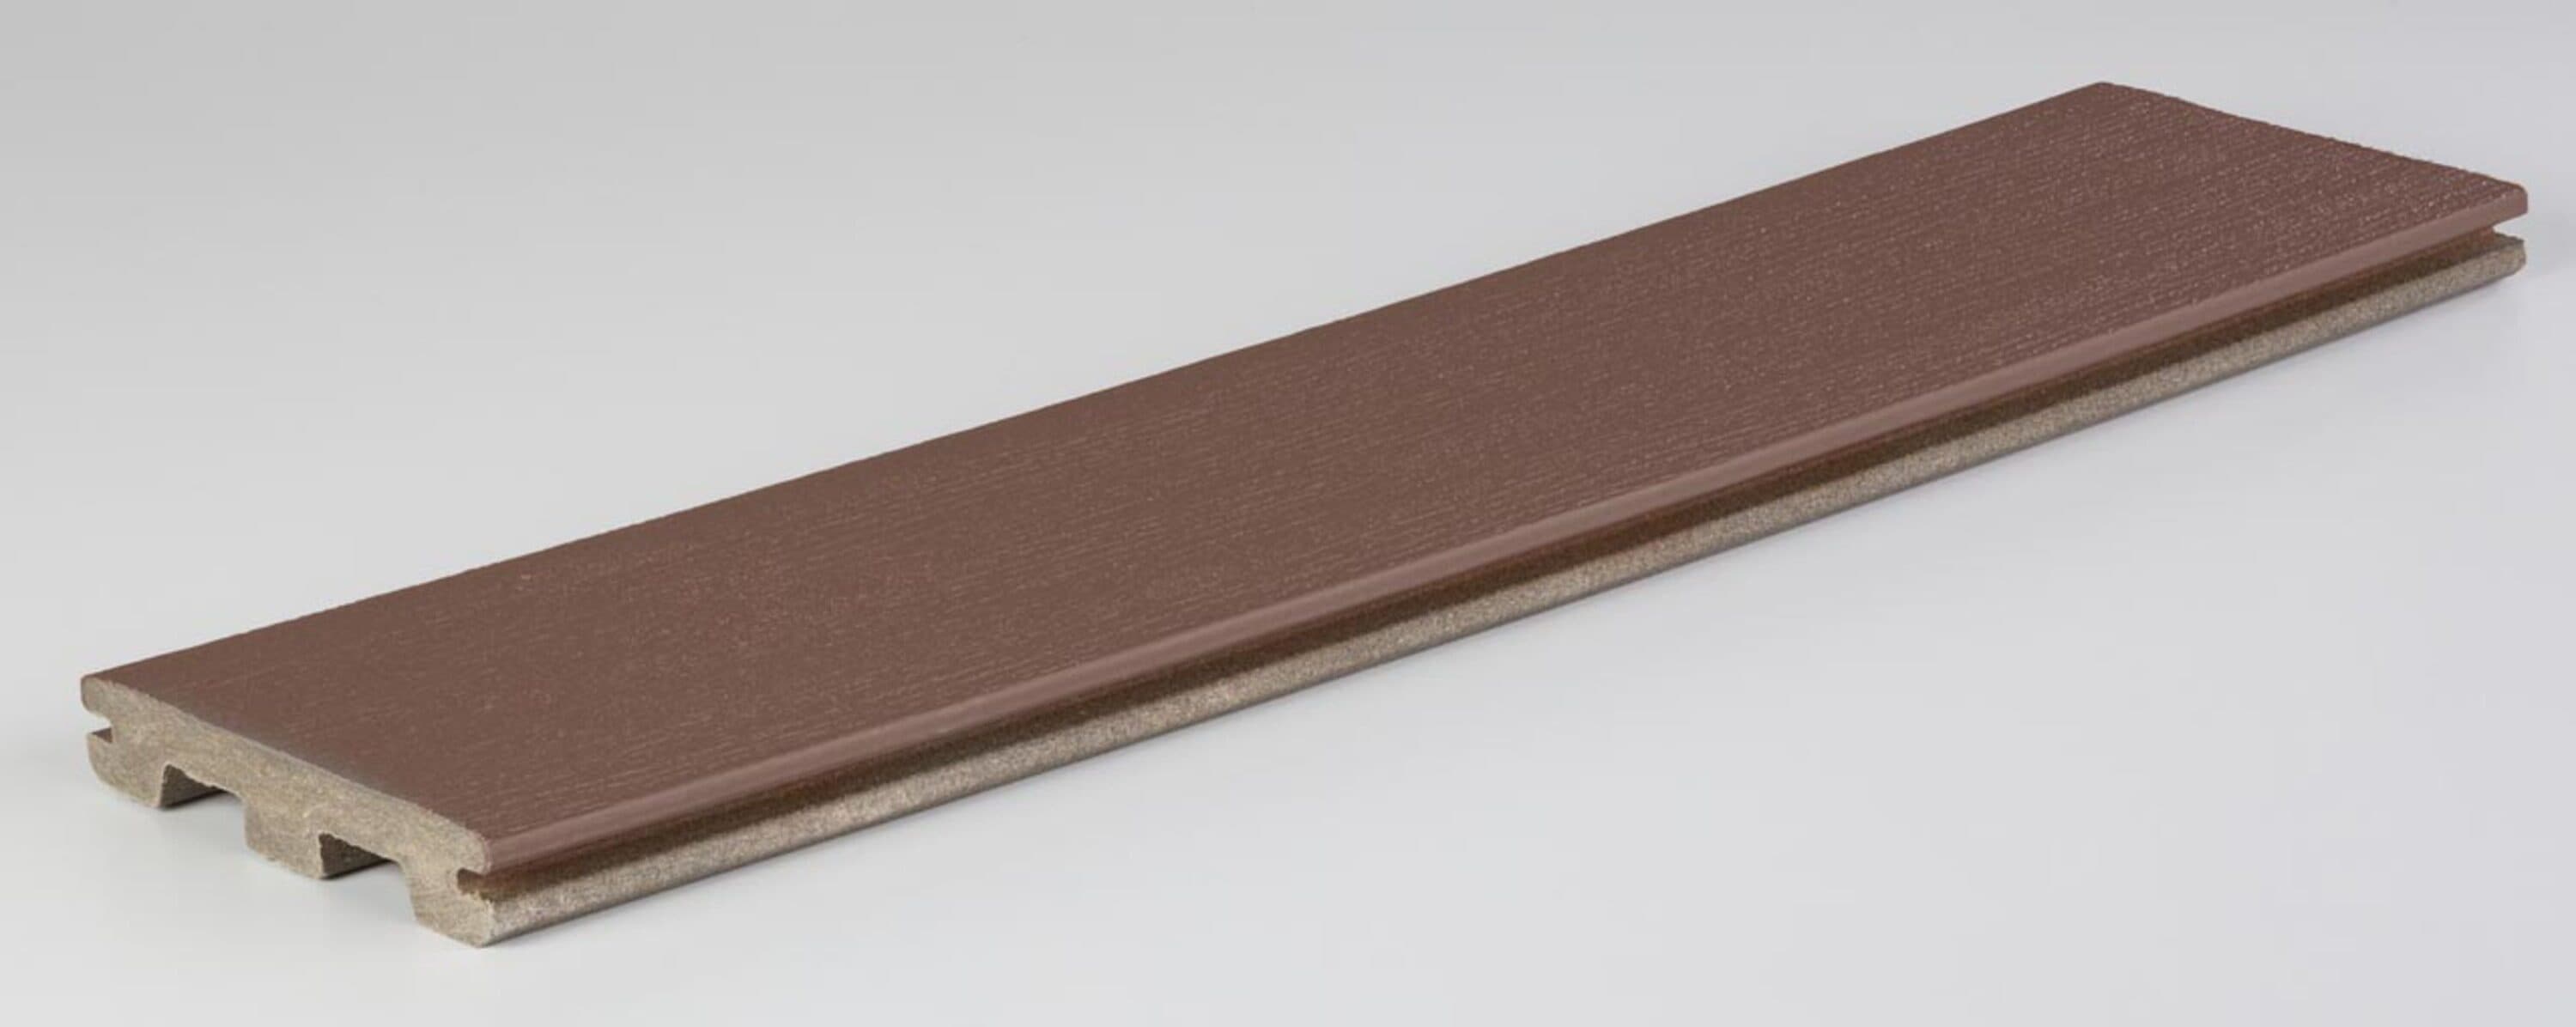 Prime 5/4-in x 6-in x 12-ft Dark Teak Square Composite Deck Board in Brown | - TimberTech ESGV5412DT